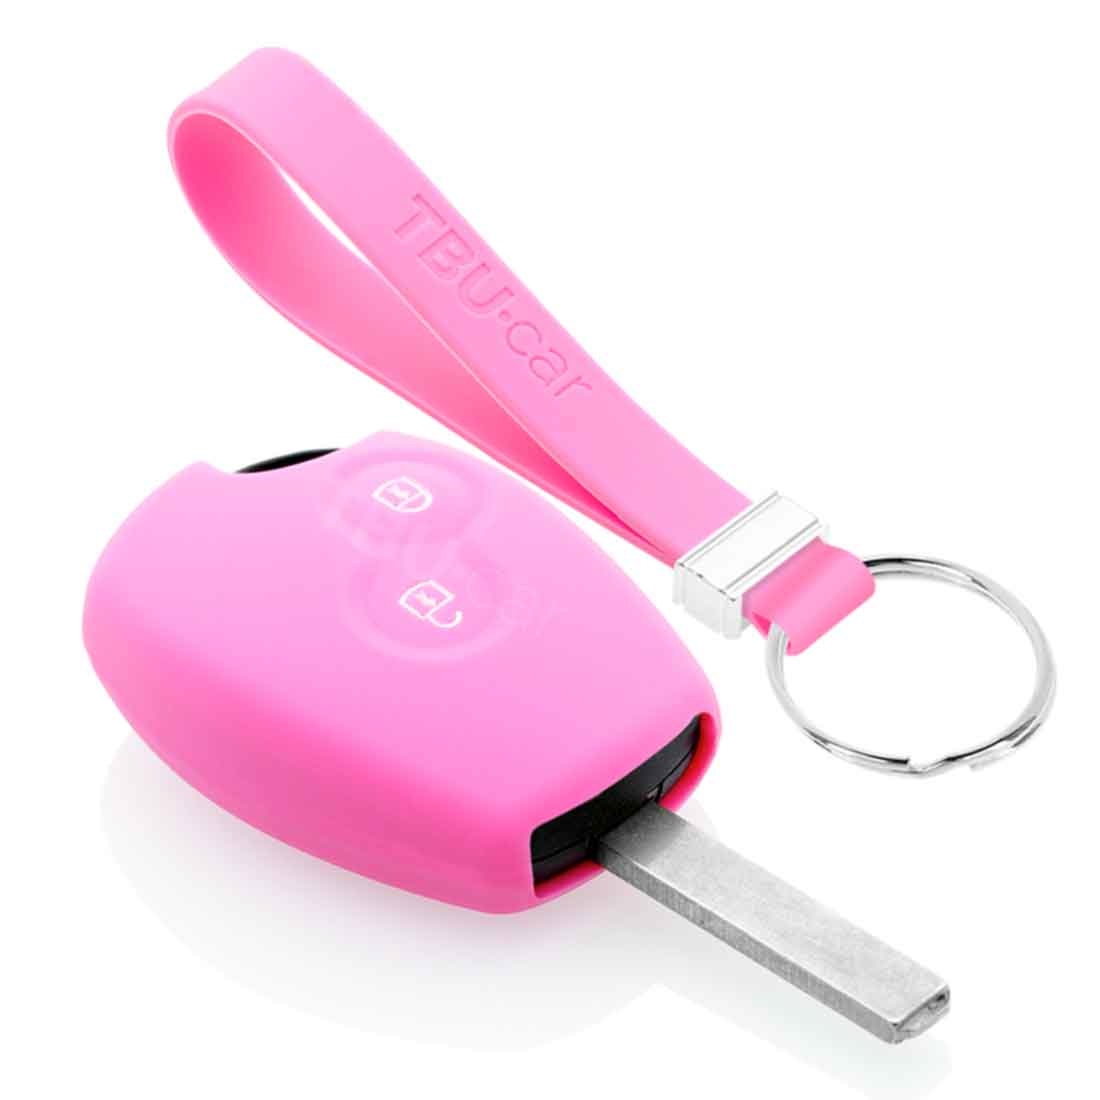 TBU car TBU car Car key cover compatible with Dacia - Silicone Protective Remote Key Shell - FOB Case Cover - Pink